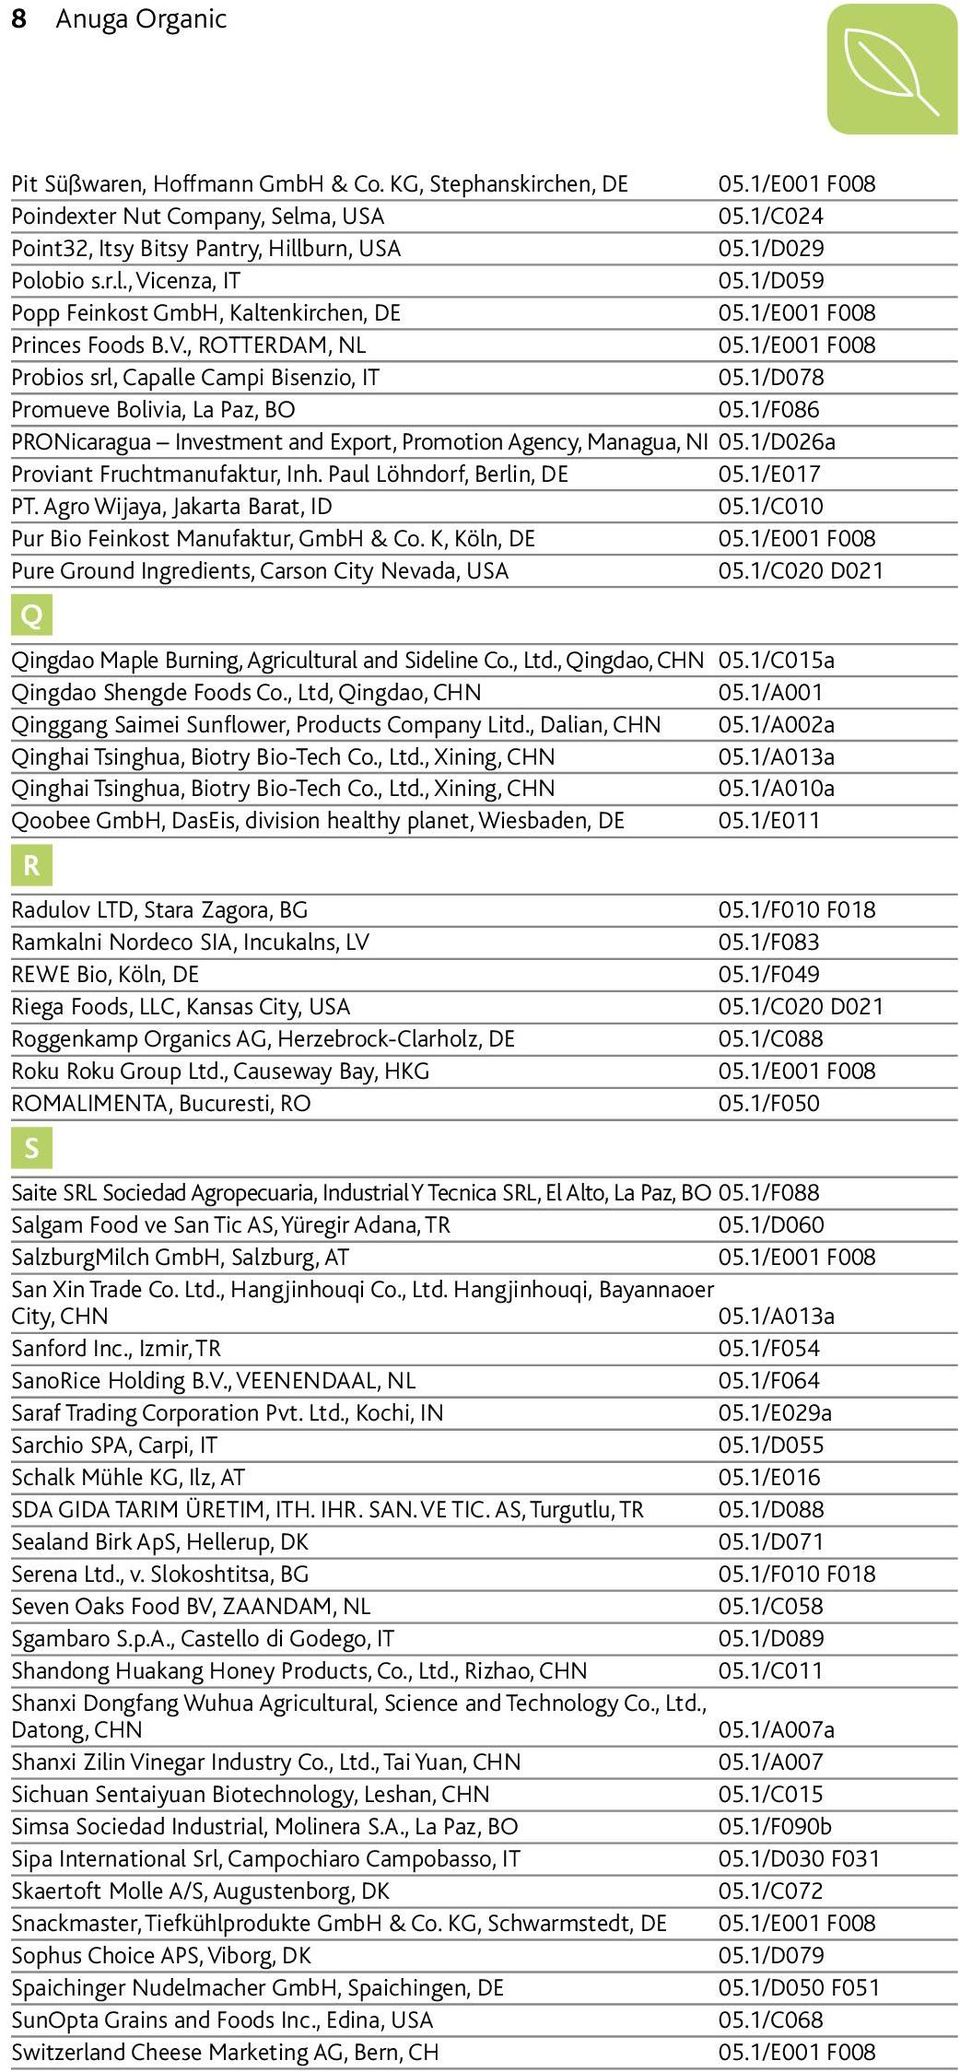 1/F086 PRONicaragua Investment and Export, Promotion Agency, Managua, NI 05.1/D026a Proviant Fruchtmanufaktur, Inh. Paul Löhndorf, Berlin, DE 05.1/E017 PT. Agro Wijaya, Jakarta Barat, ID 05.